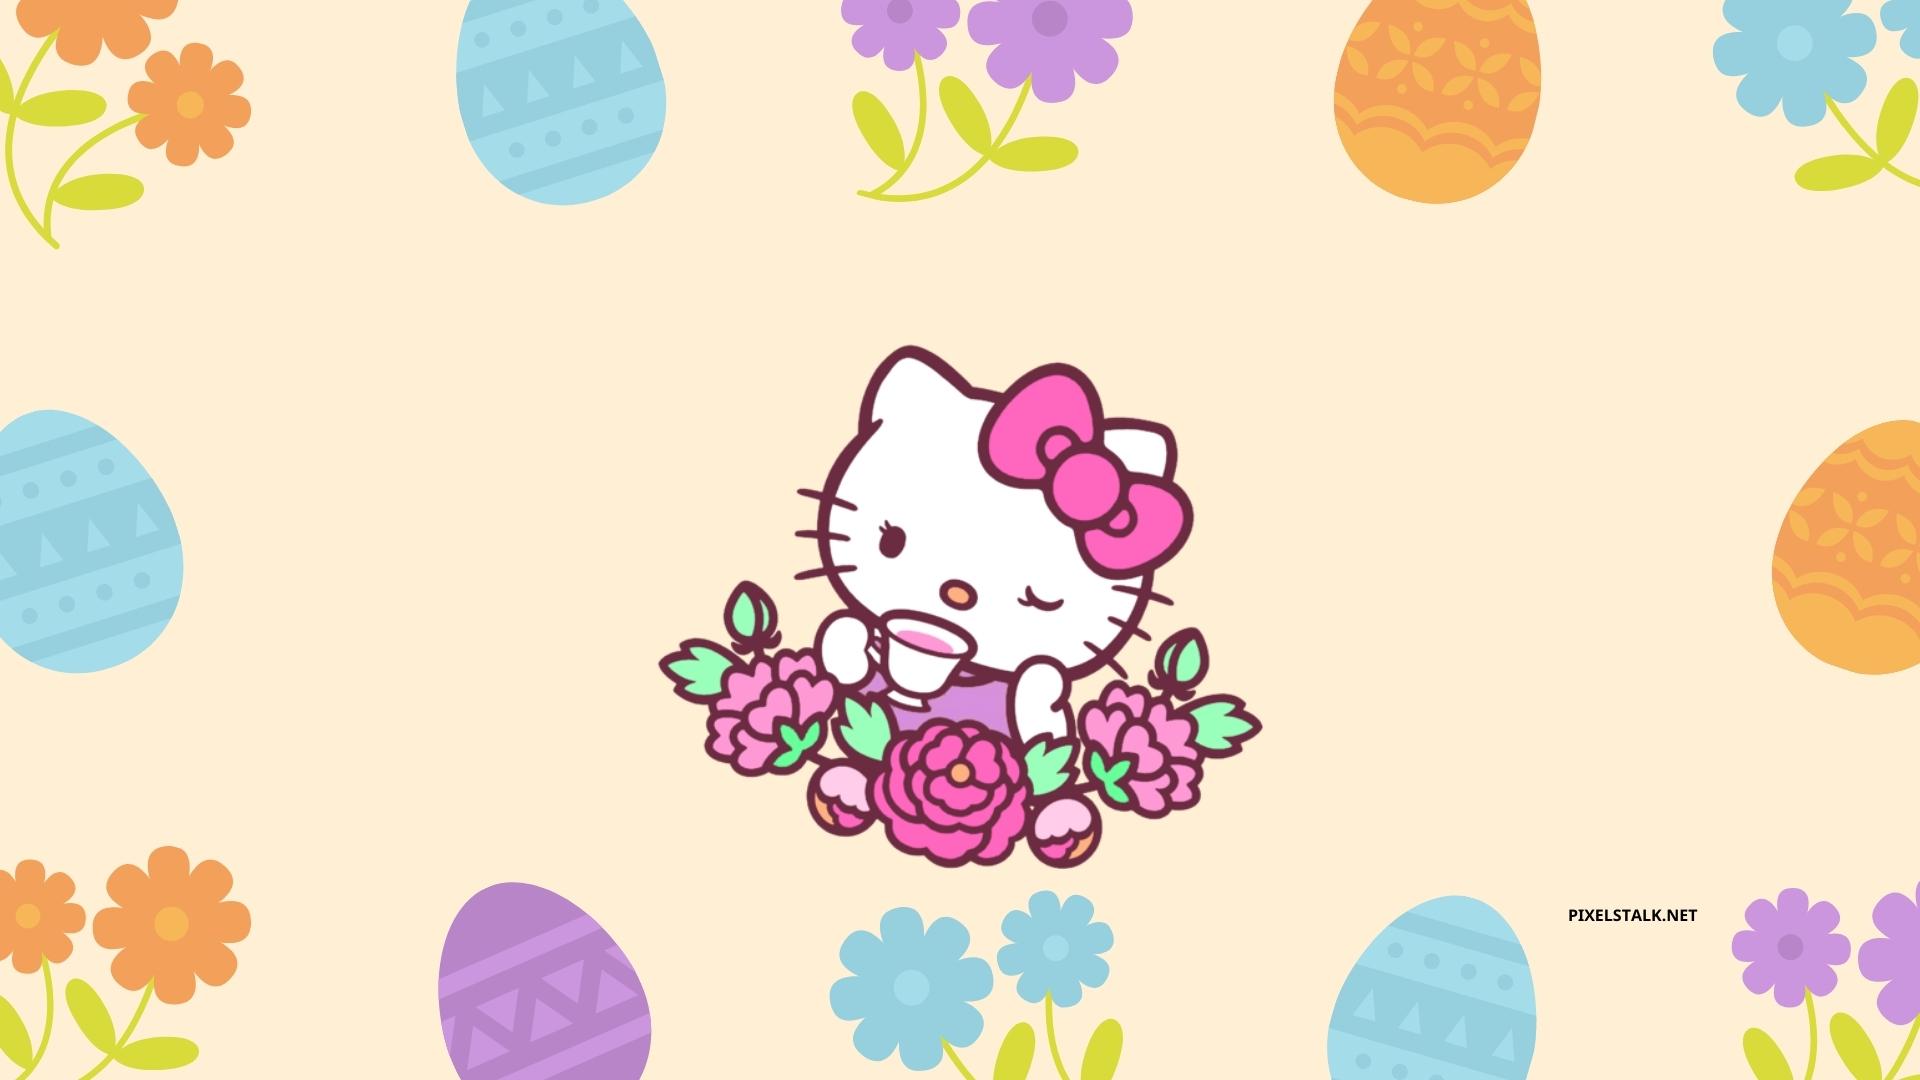 Hello Kitty Easter Bunny Wallpaper HD